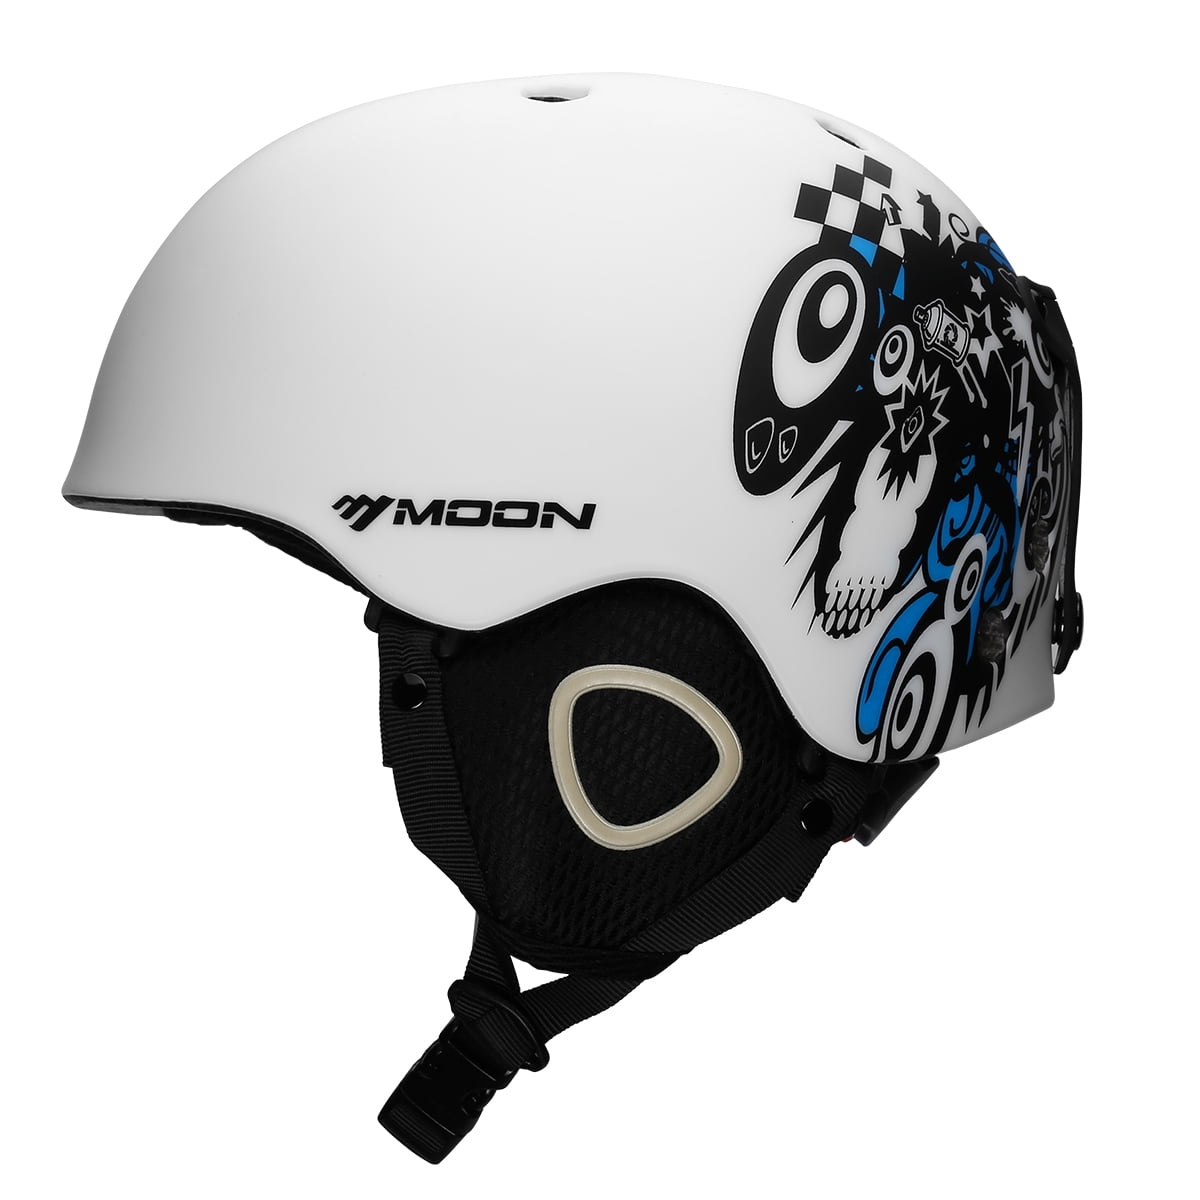 MOON Ski Helmet Adult Snowboard Skateboard Safety Skiing Helmets for men 